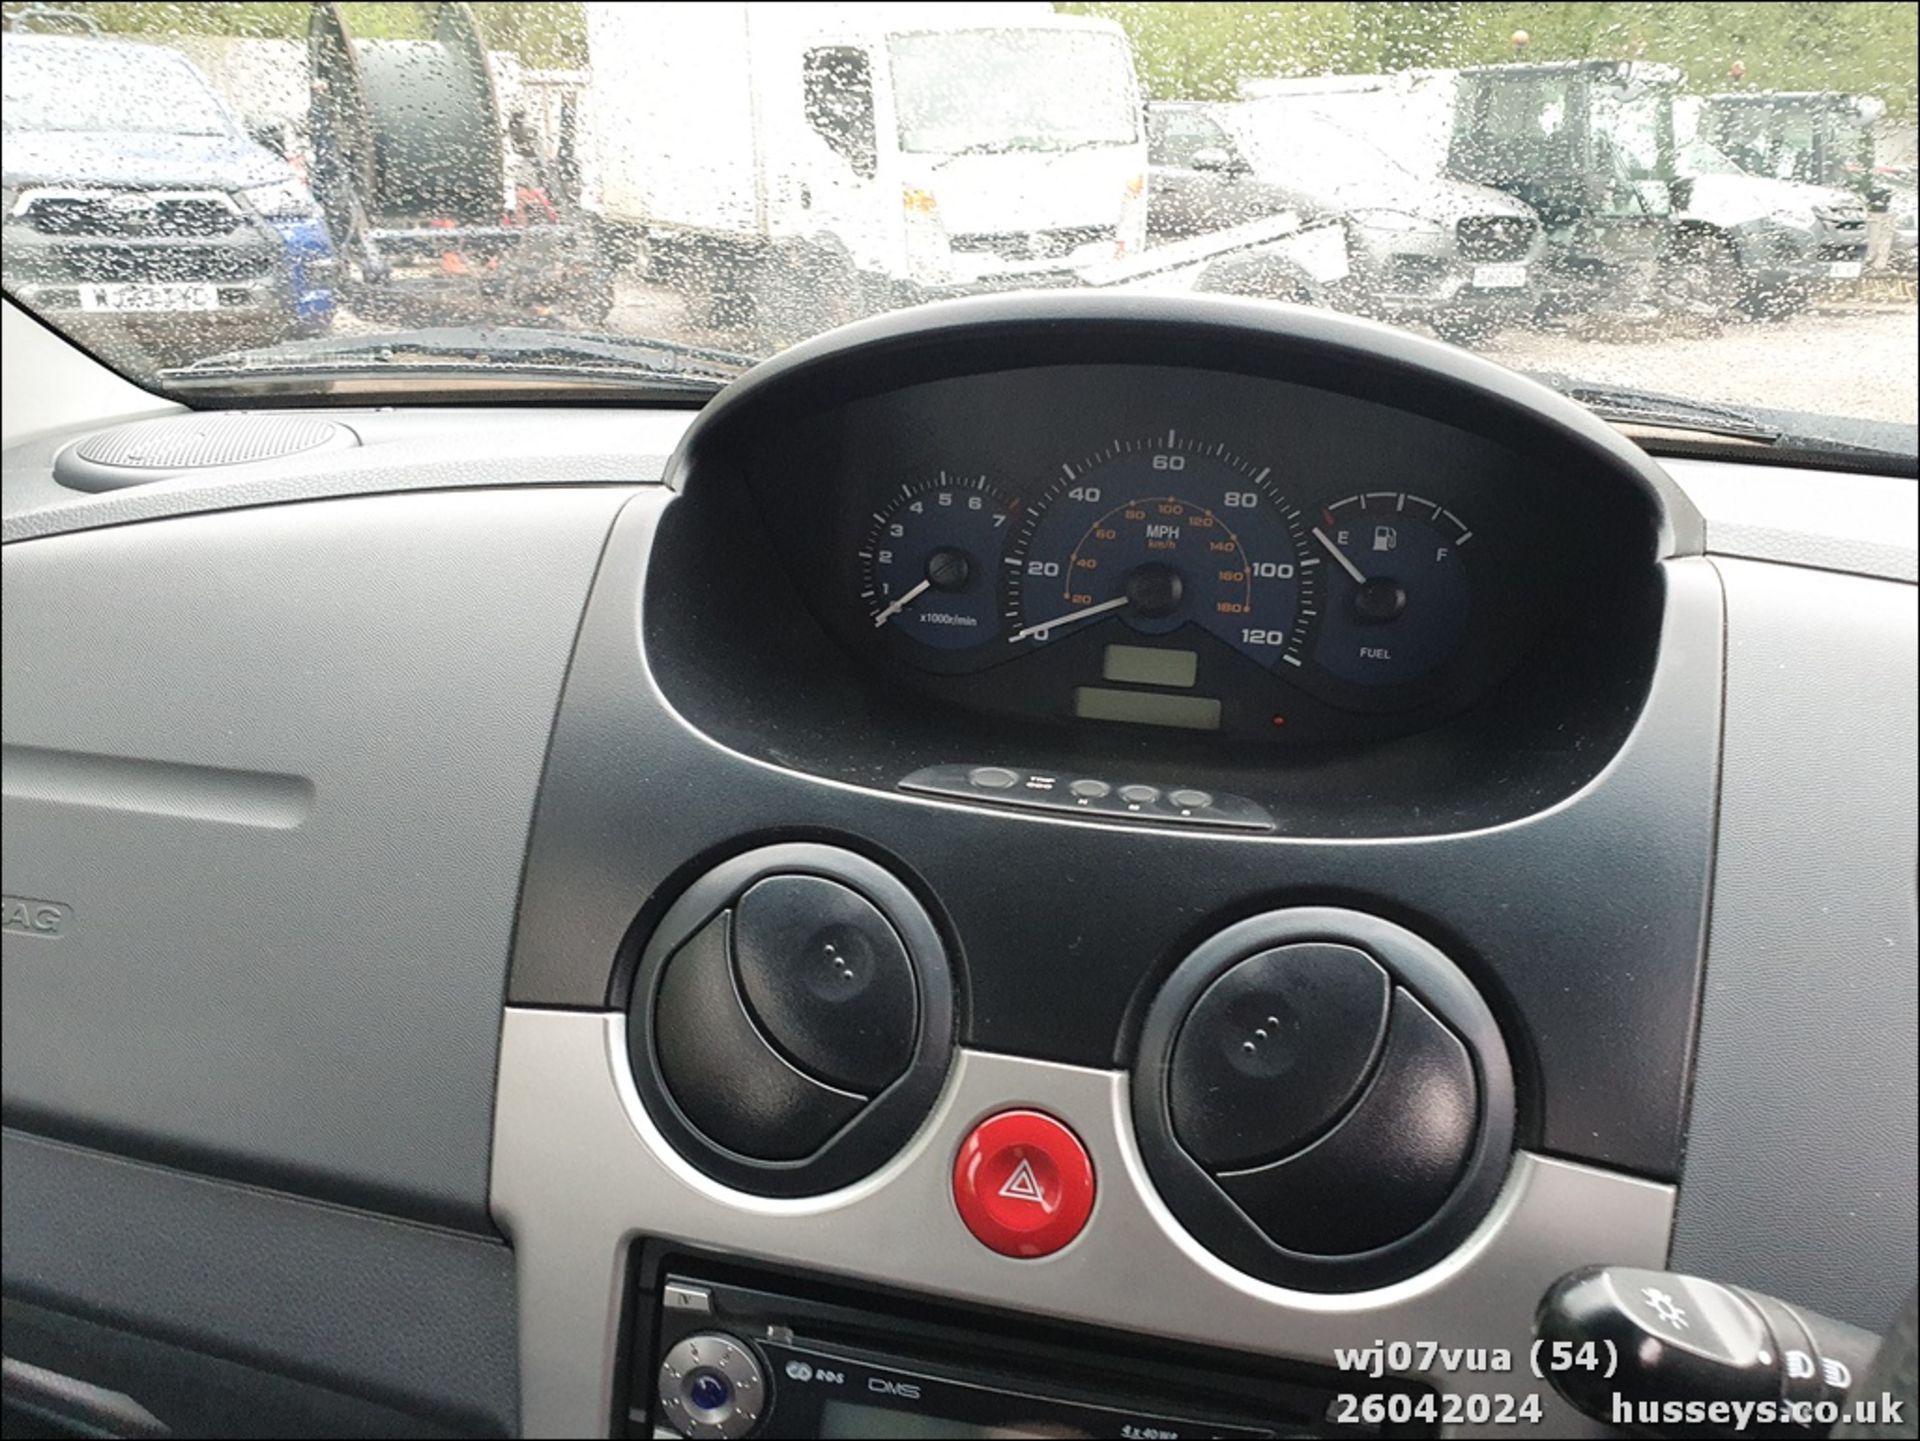 07/07 CHEVROLET MATIZ SE AUTO - 796cc 5dr Hatchback (Blue, 36k) - Image 55 of 56